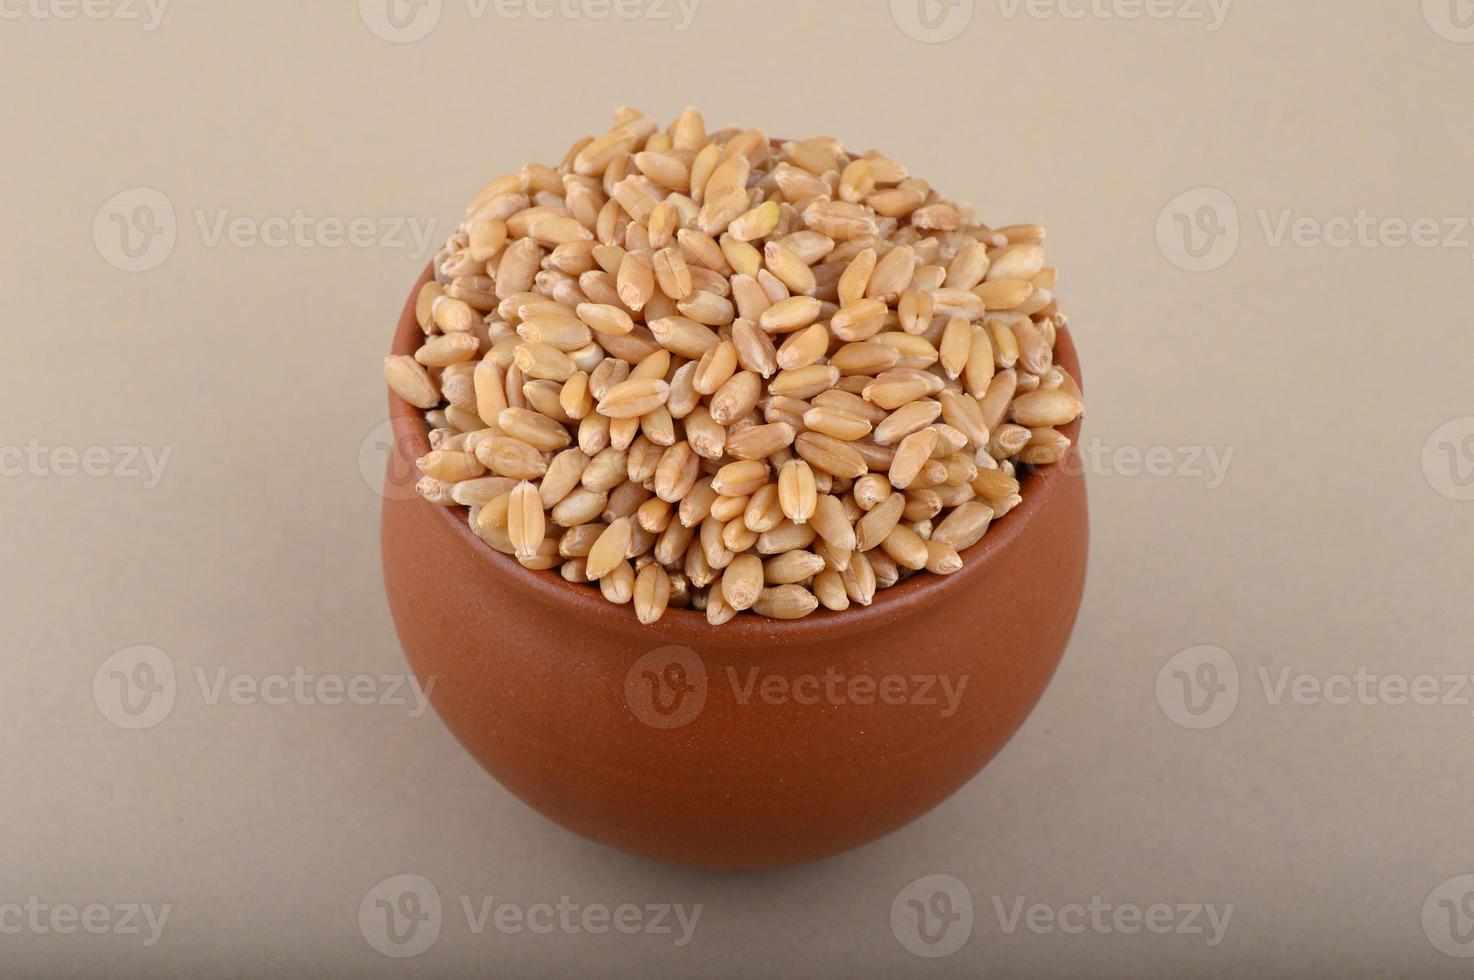 granos de trigo en cazuela de barro sobre fondo crema. de cerca. foto